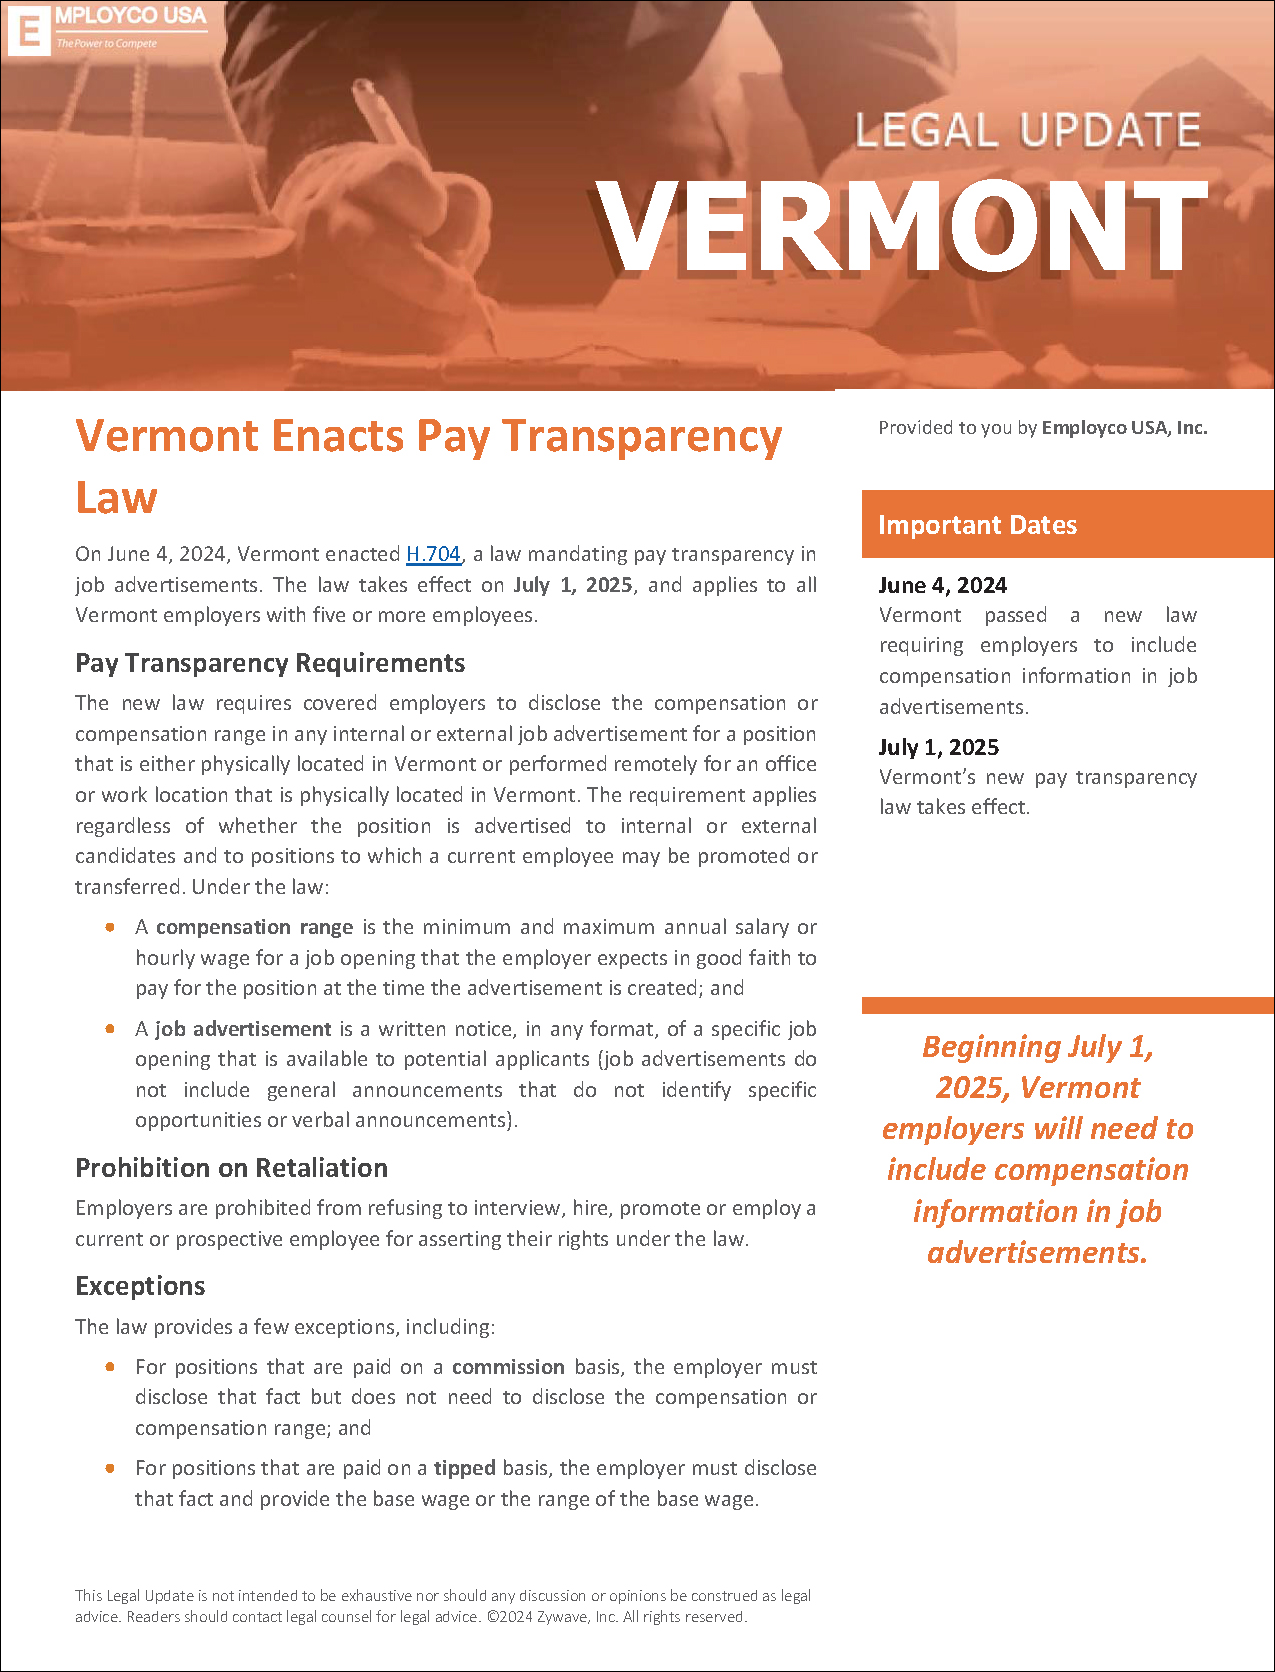 Vermont Legal Update